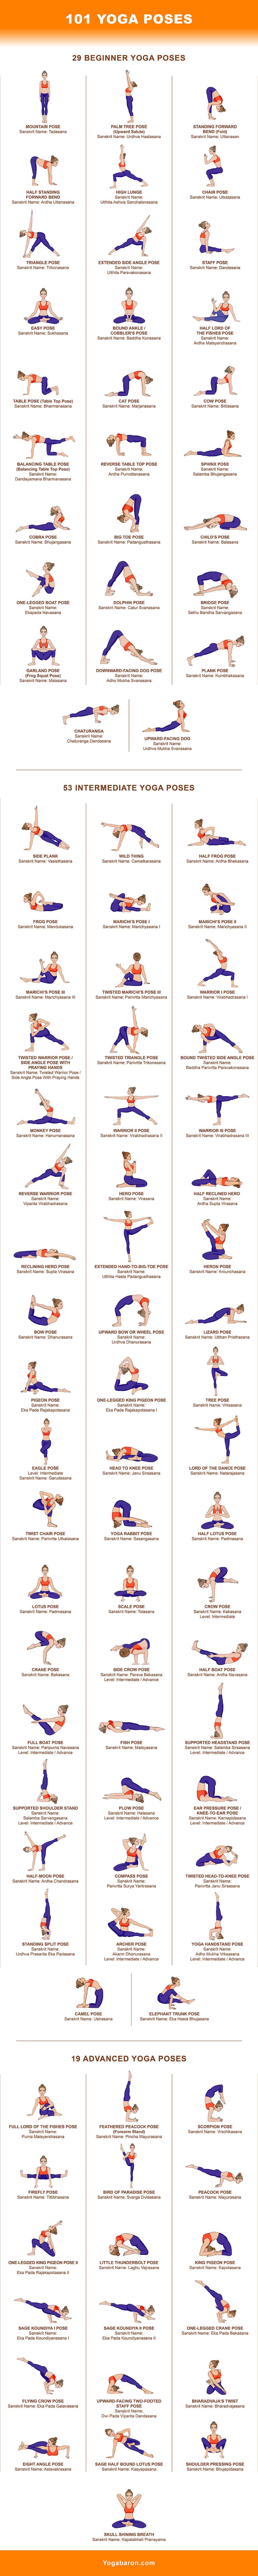 瑜伽姿势图表由Yogabaron.com提供